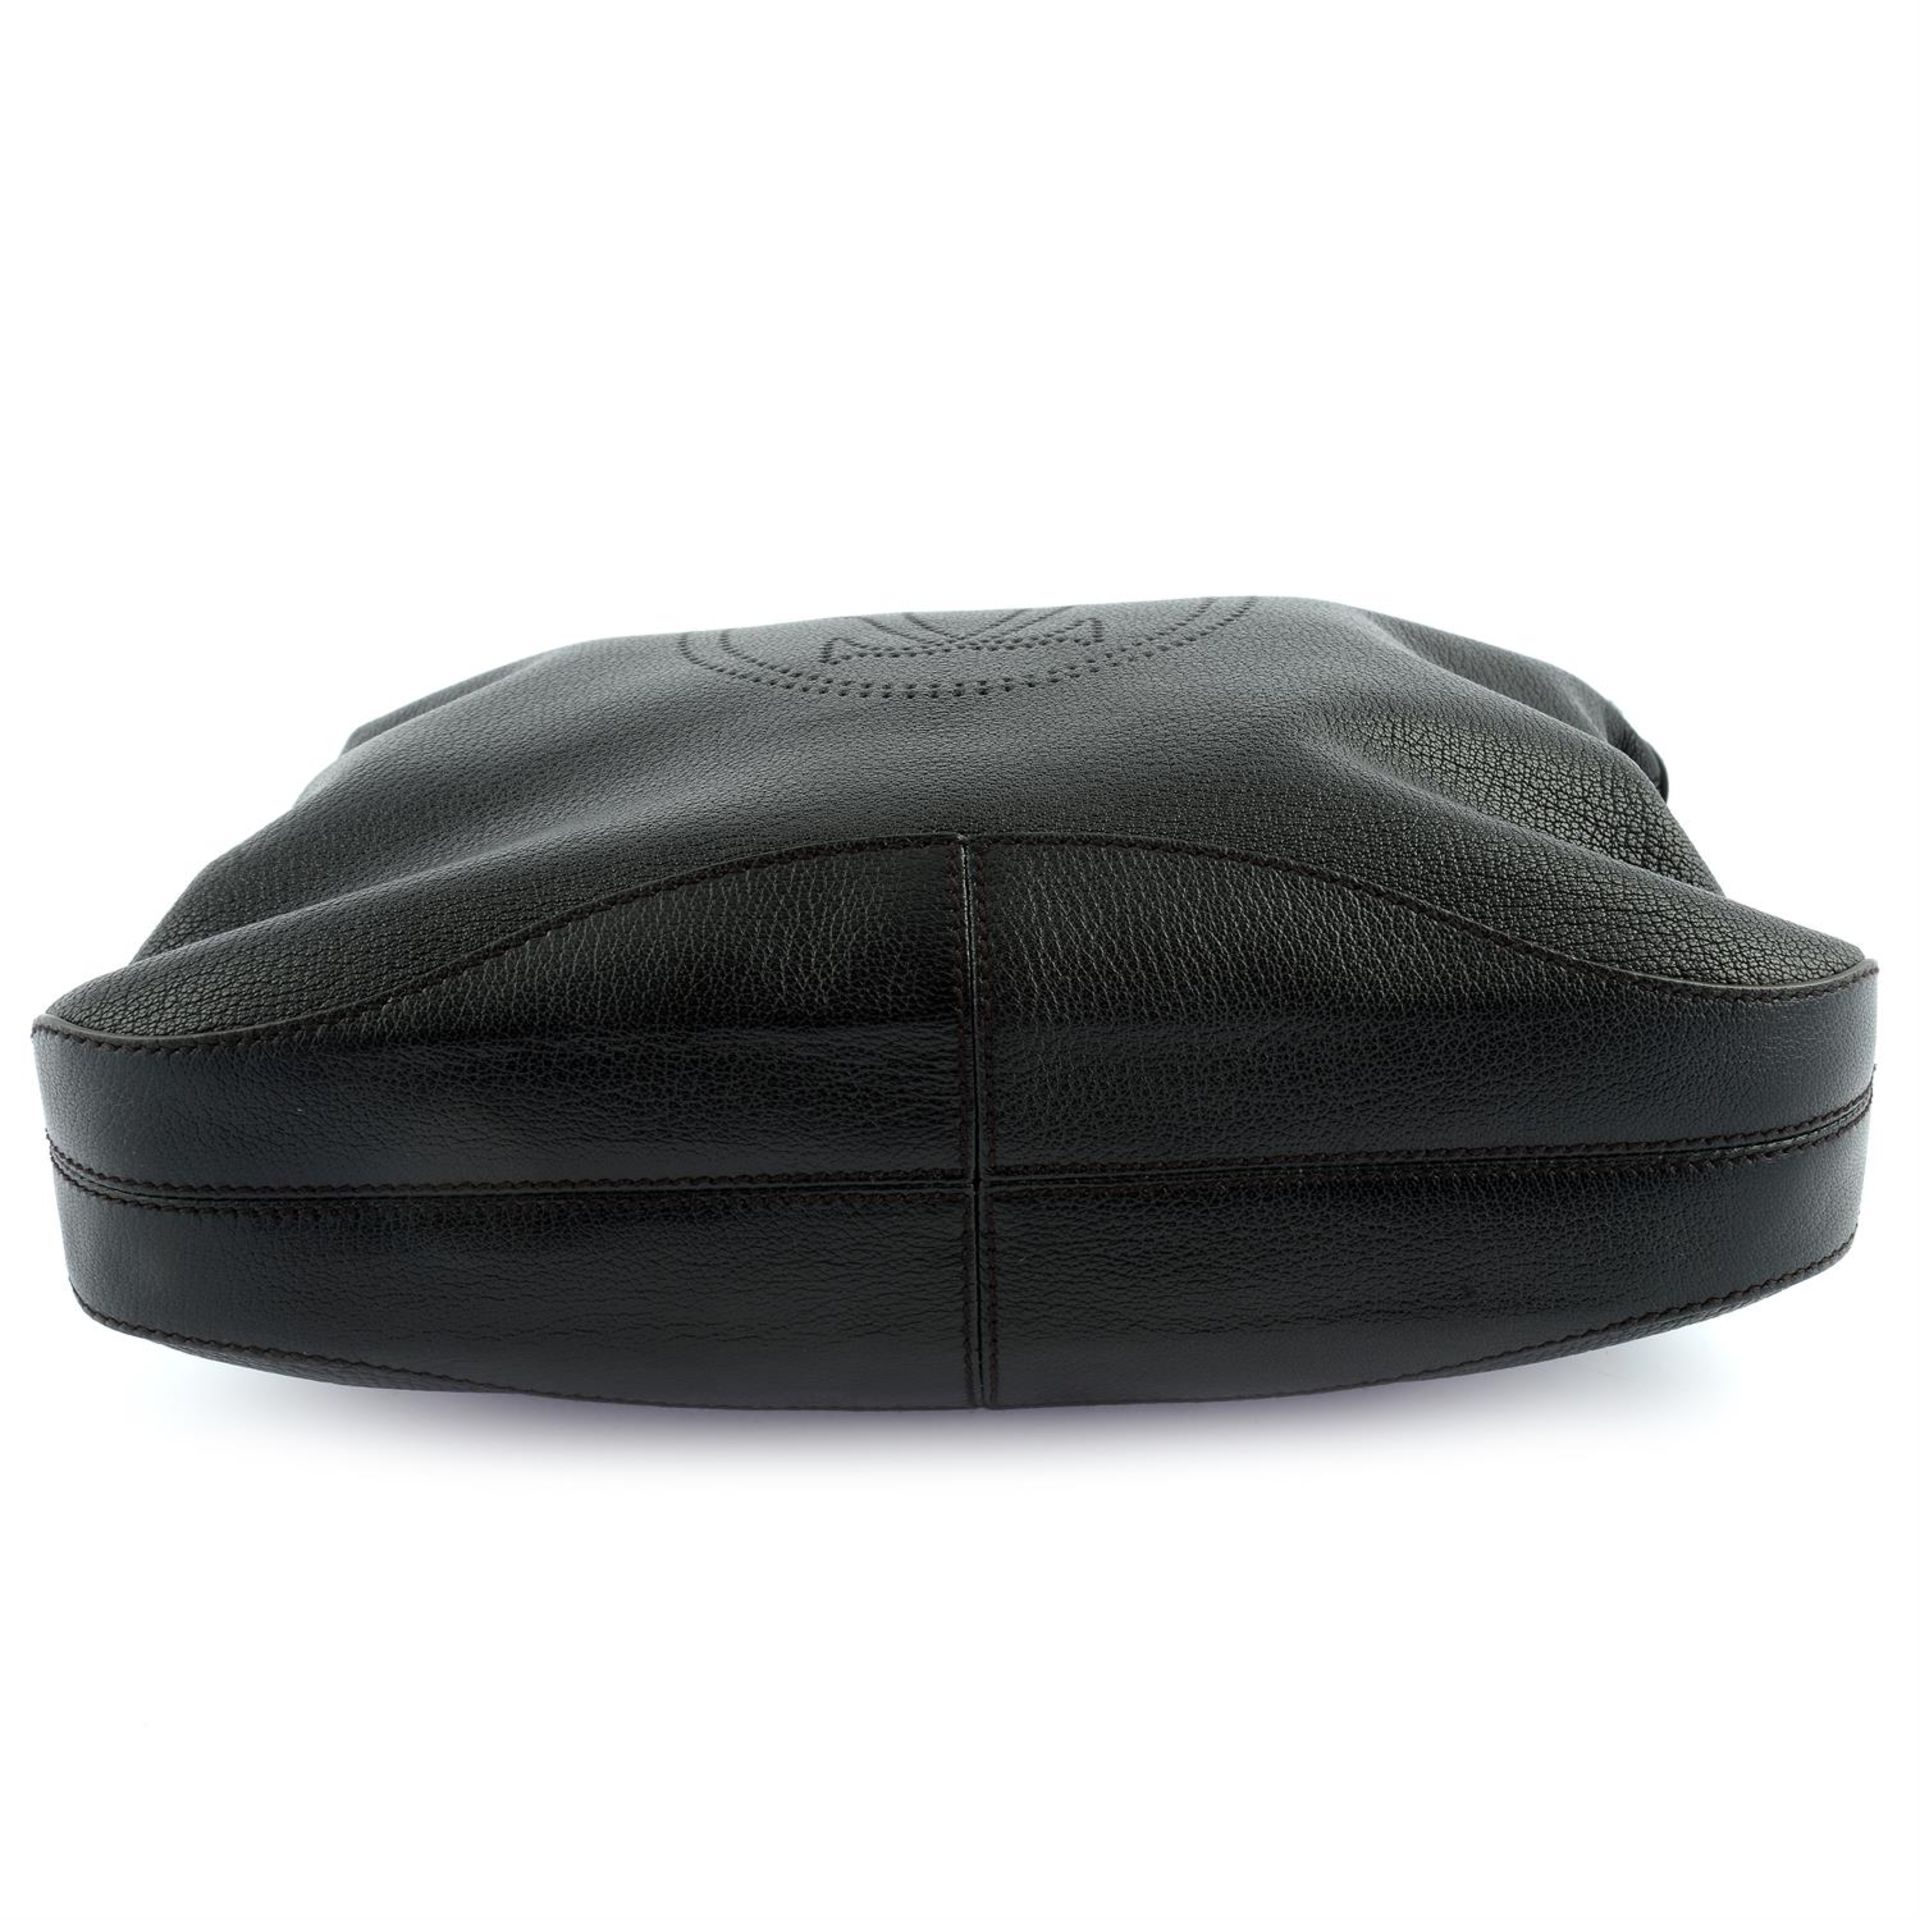 CARTIER- a black leather Marcello De Cartier fold over clutch. - Image 4 of 5